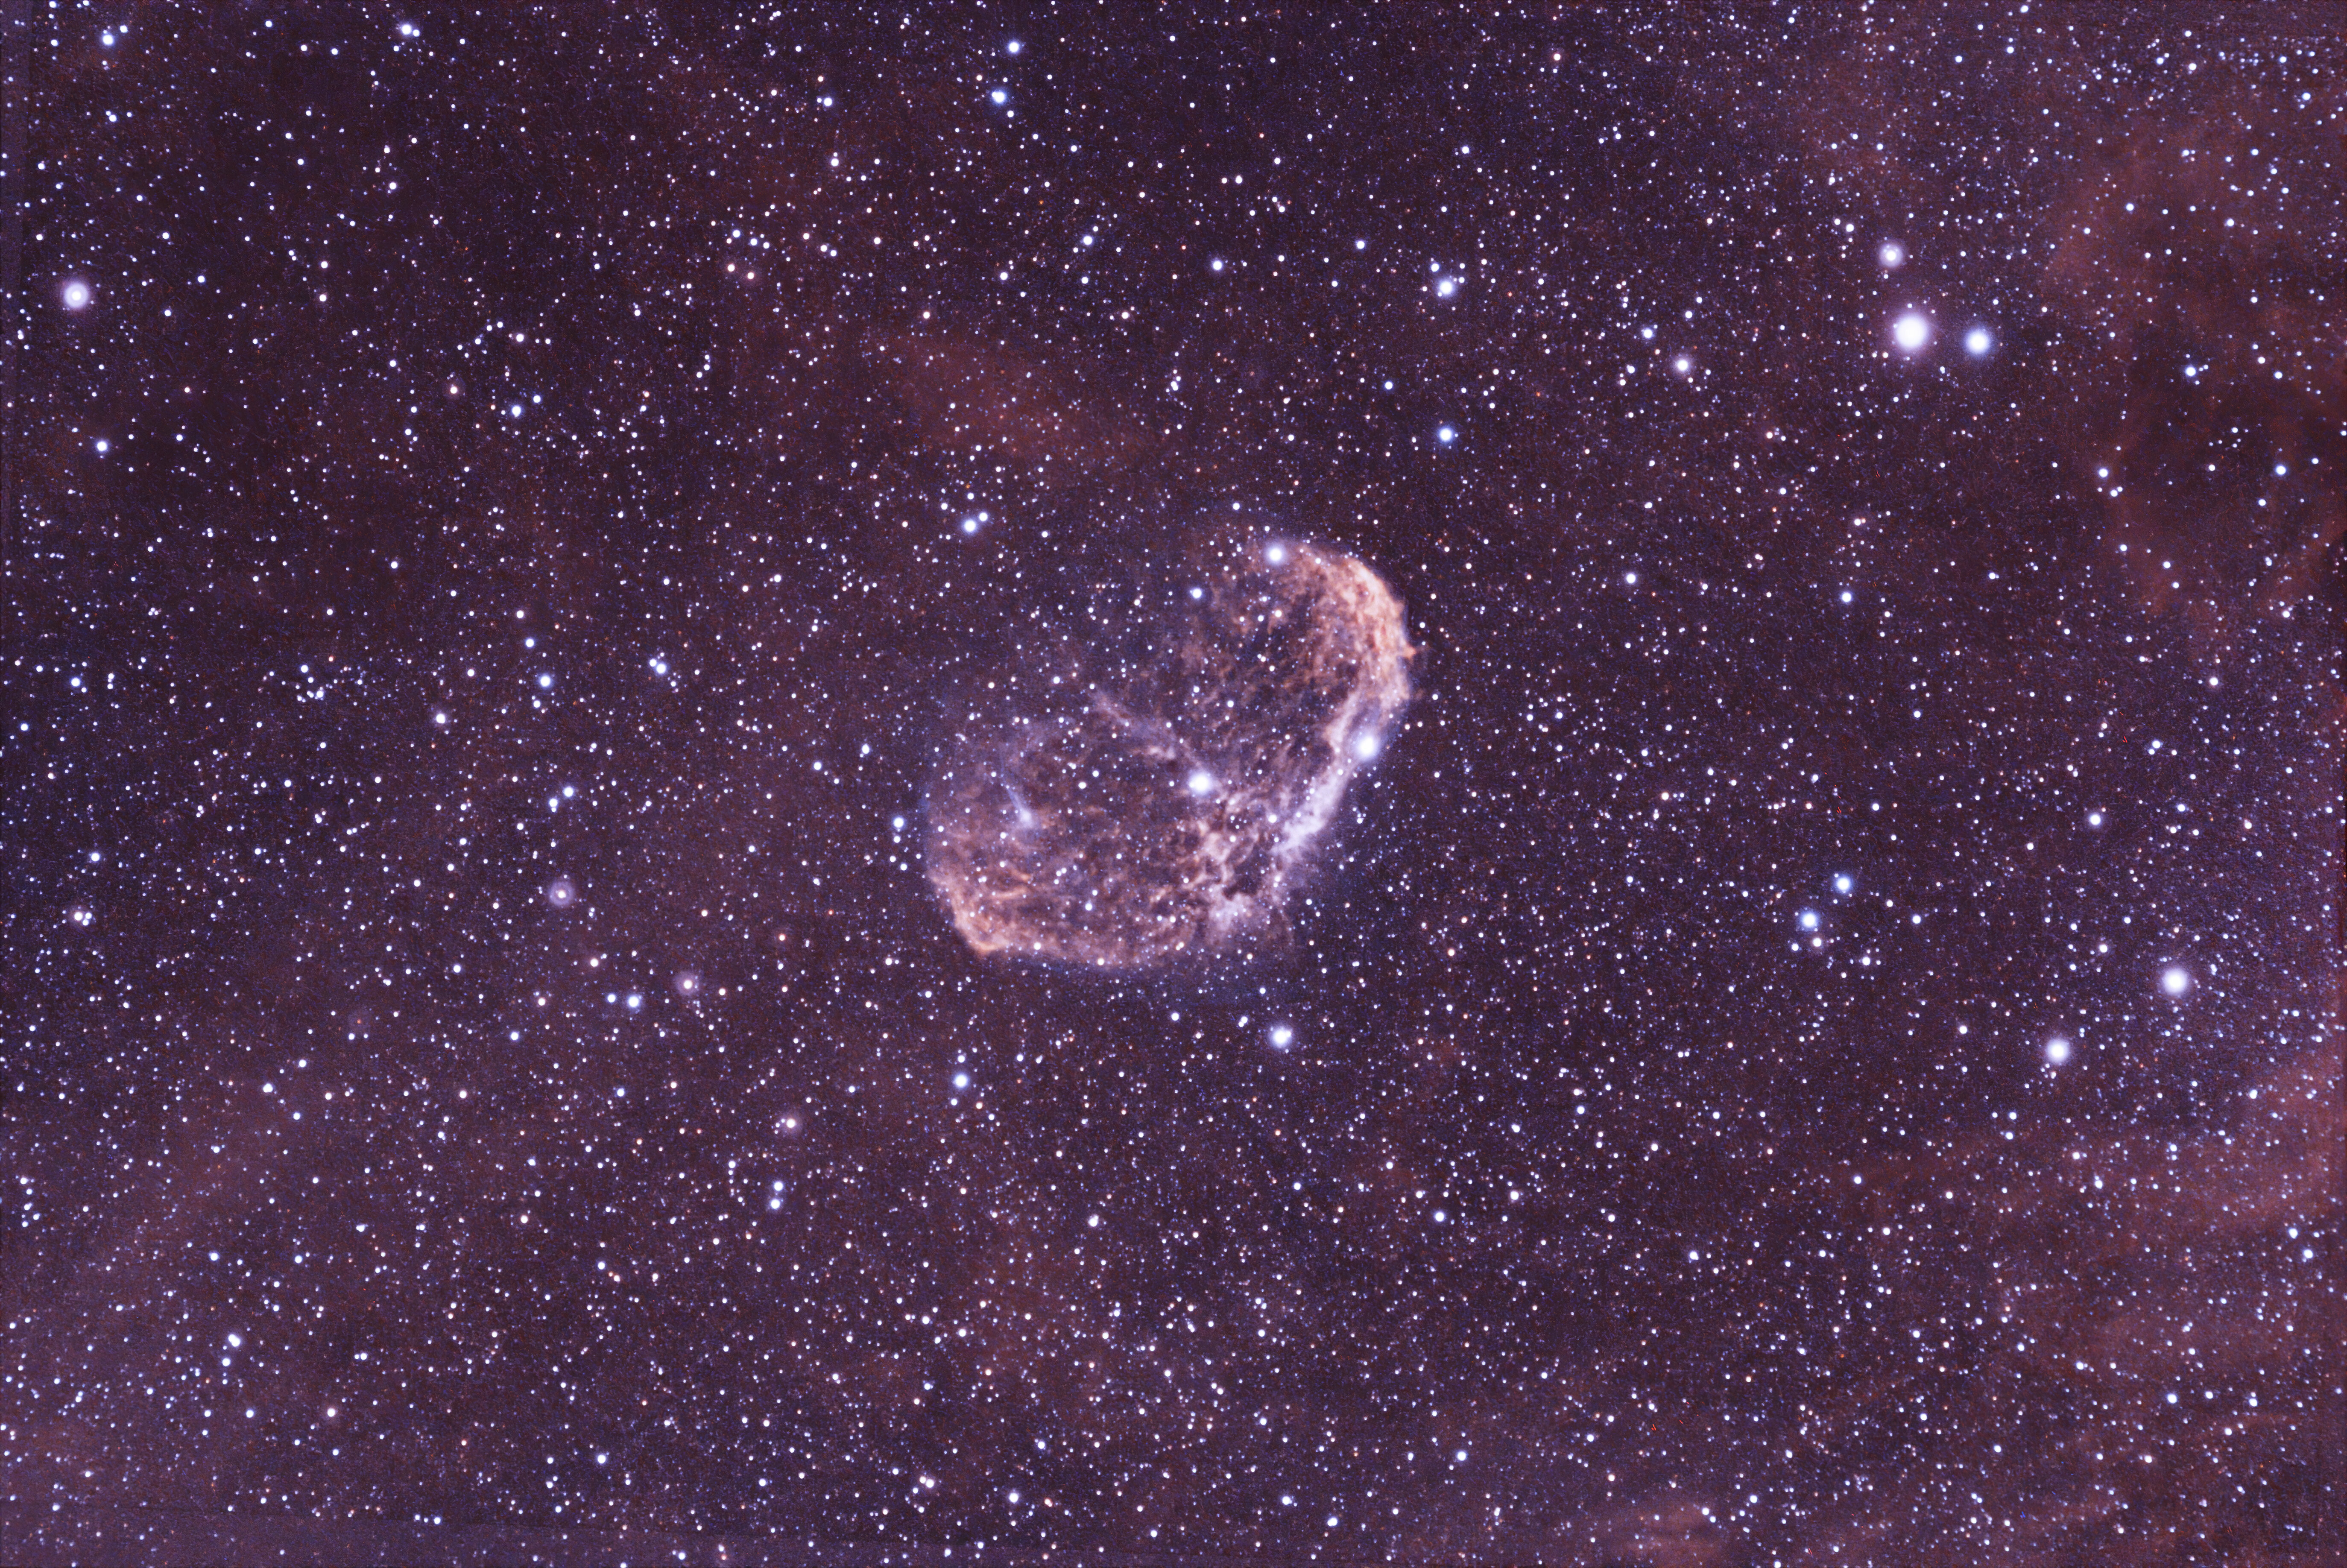 Ngc 6888 - Crescent Nebula